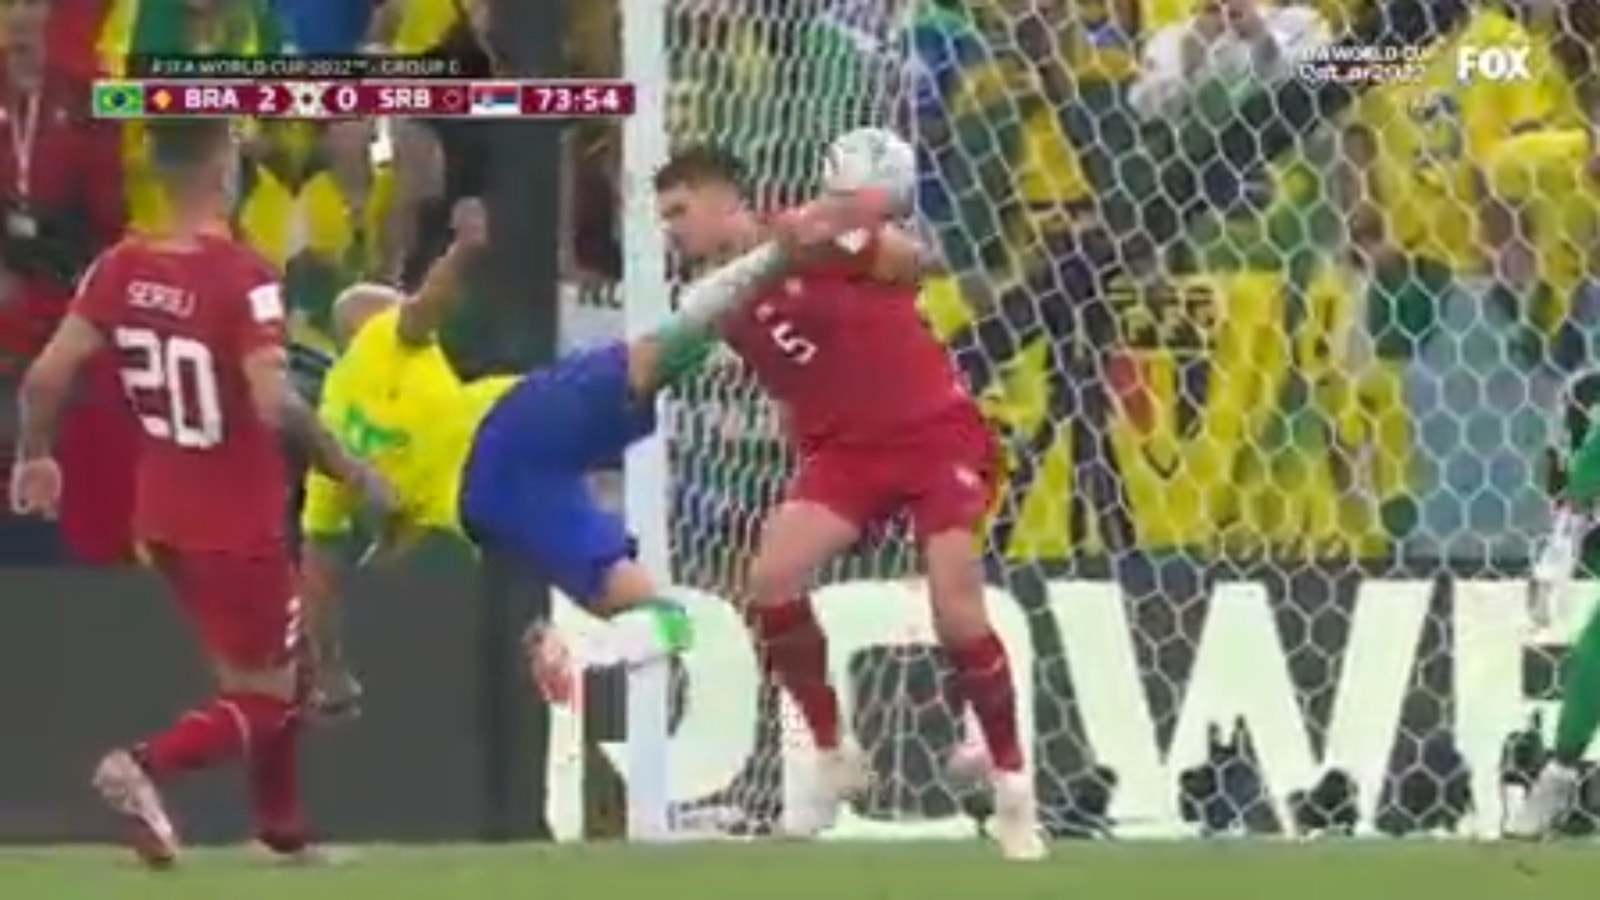 Richardson's acrobatic goal puts Brazil ahead 2-0